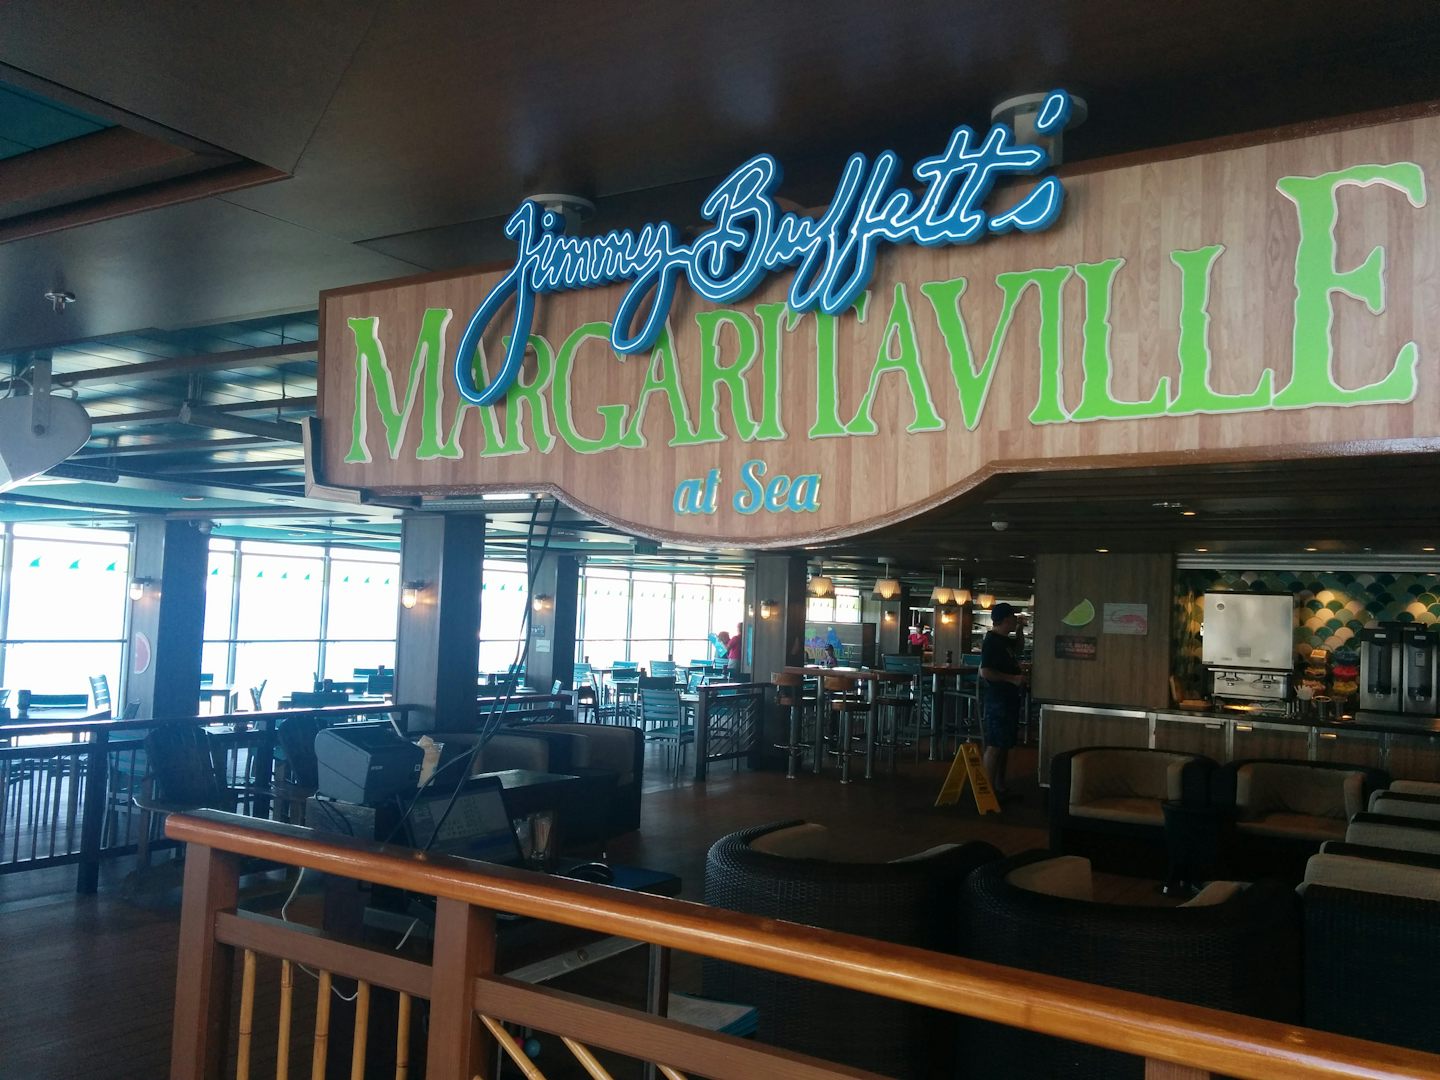 Margaritaville bar entrance.